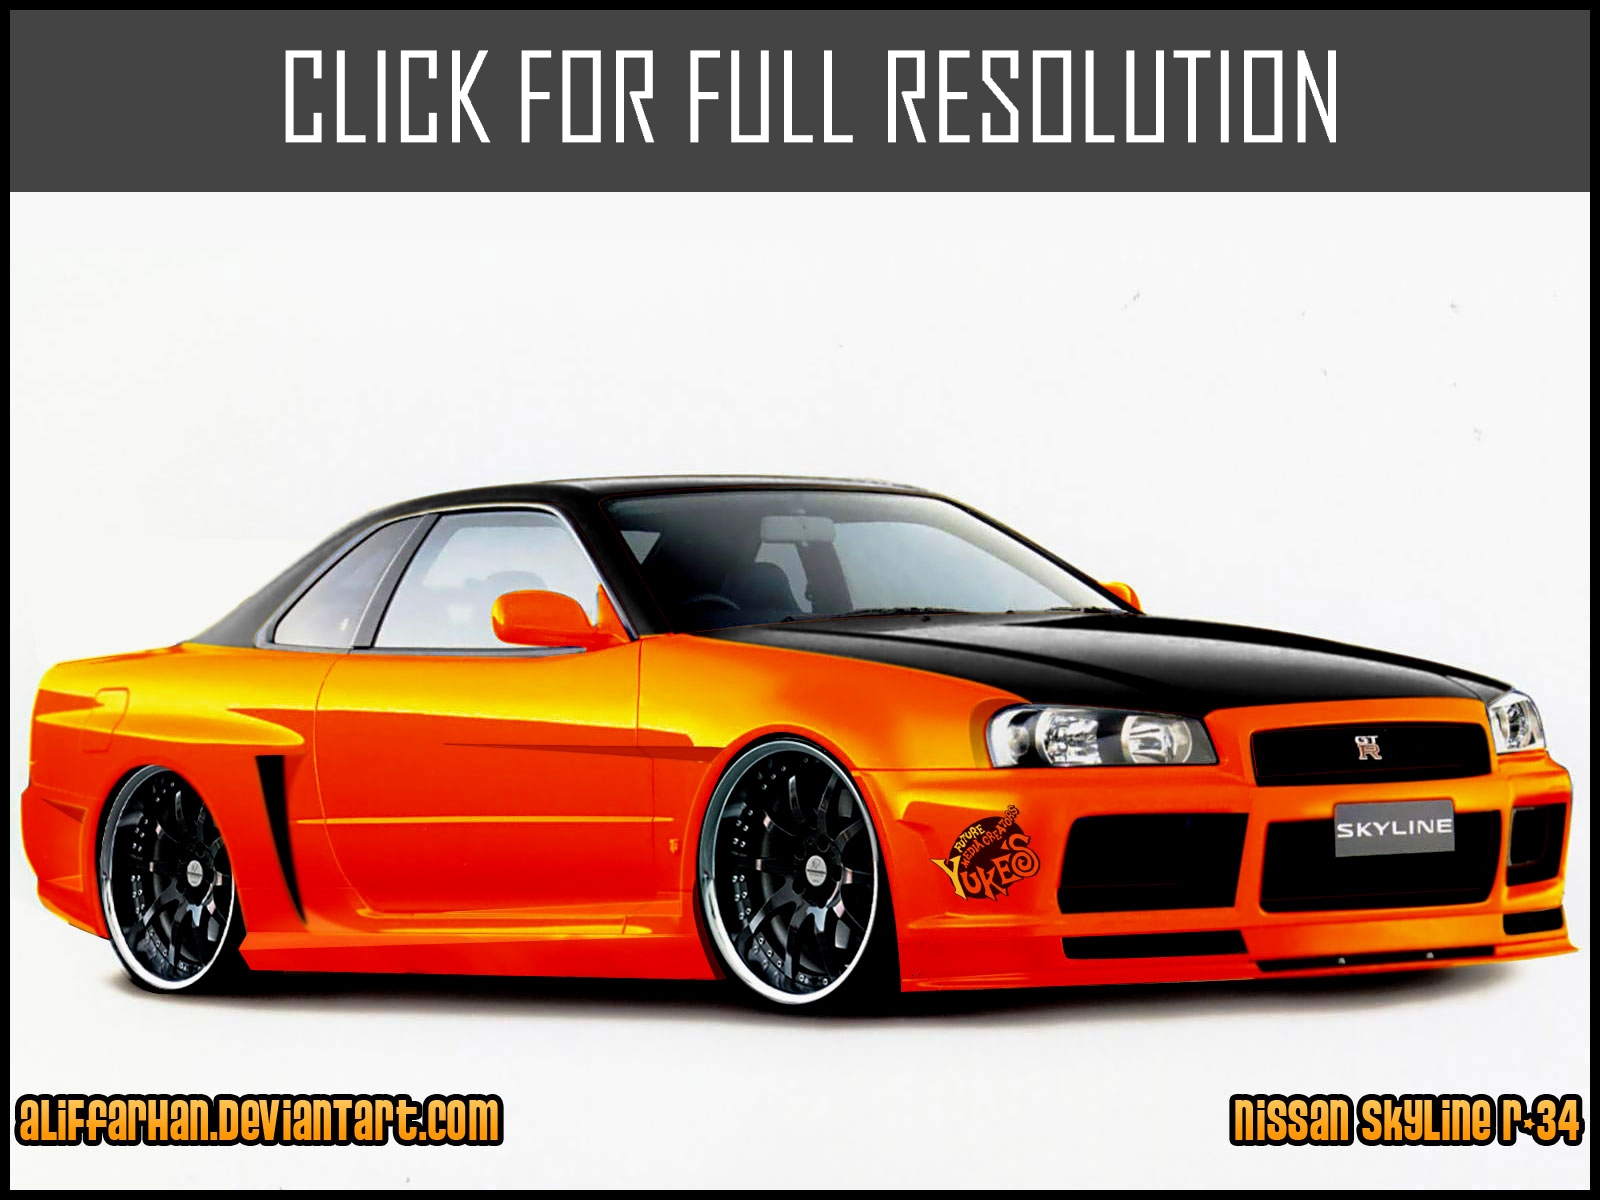 Nissan Skyline Orange